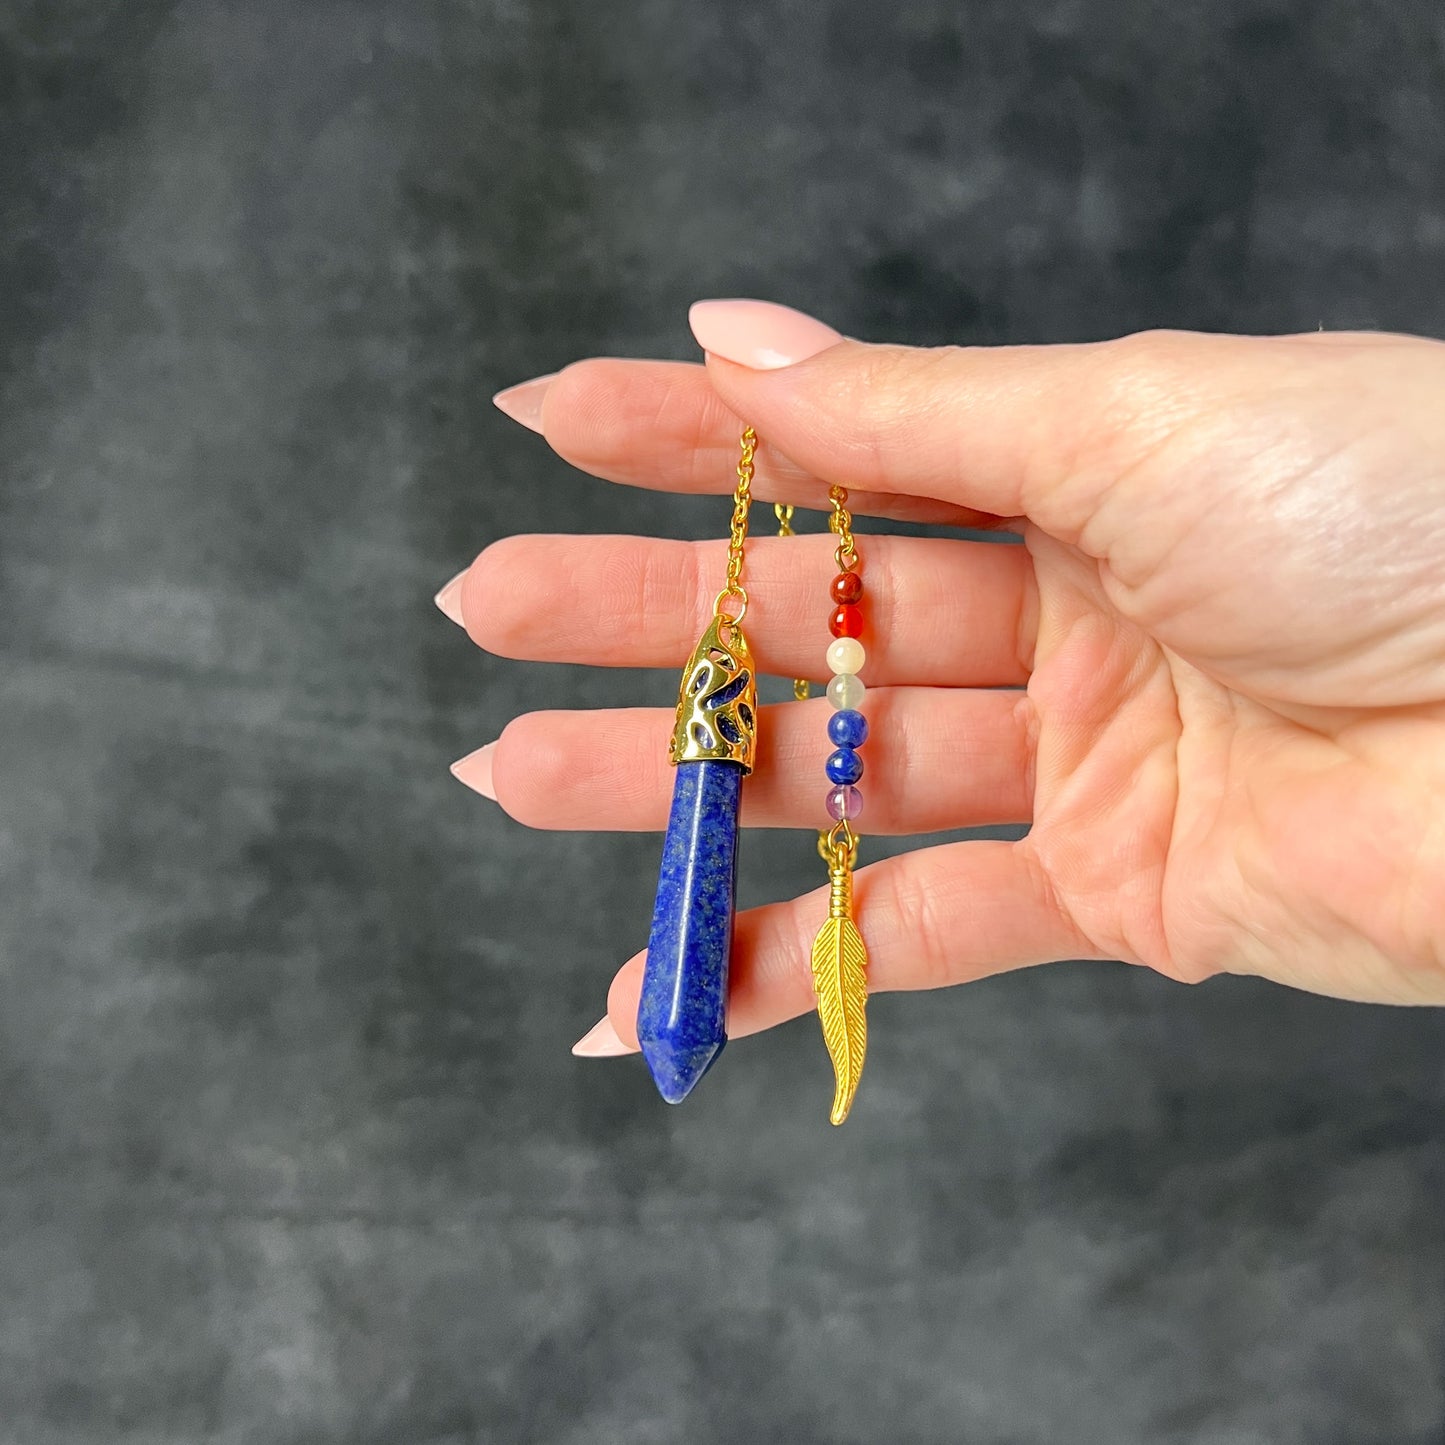 7 chakras lapis lazuli golden pendulum with a feather charm Baguette Magick